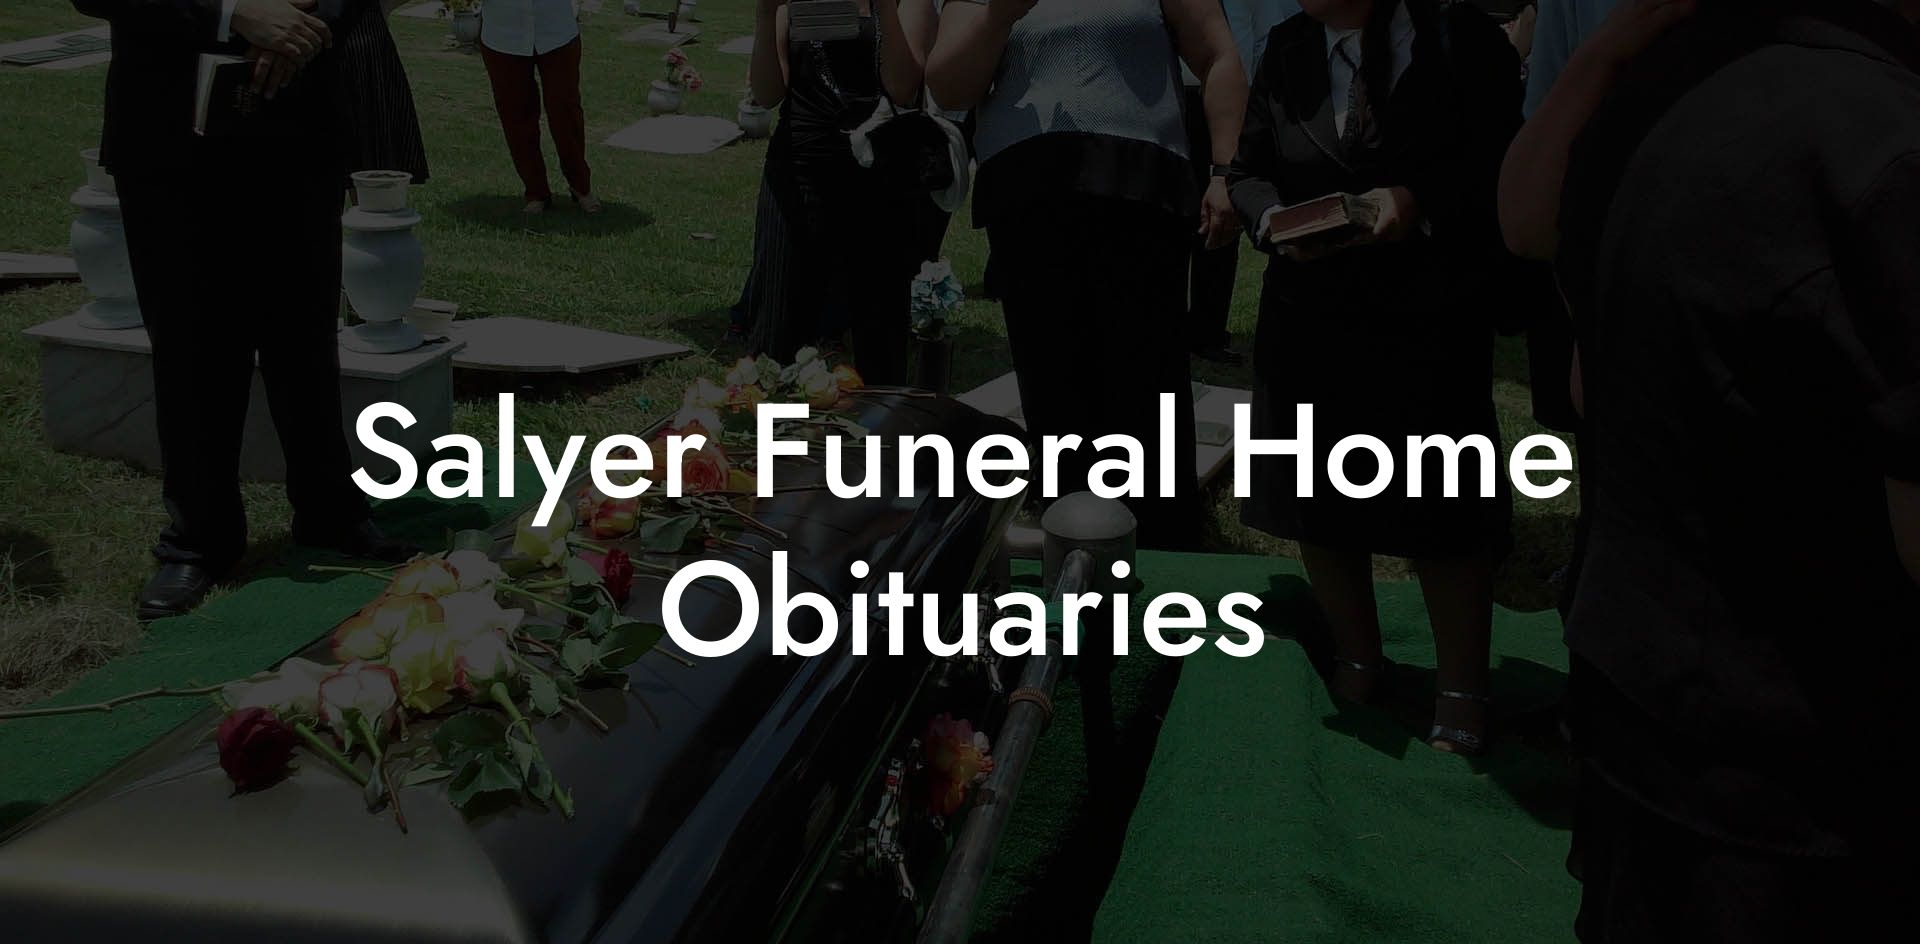 Salyer Funeral Home Obituaries